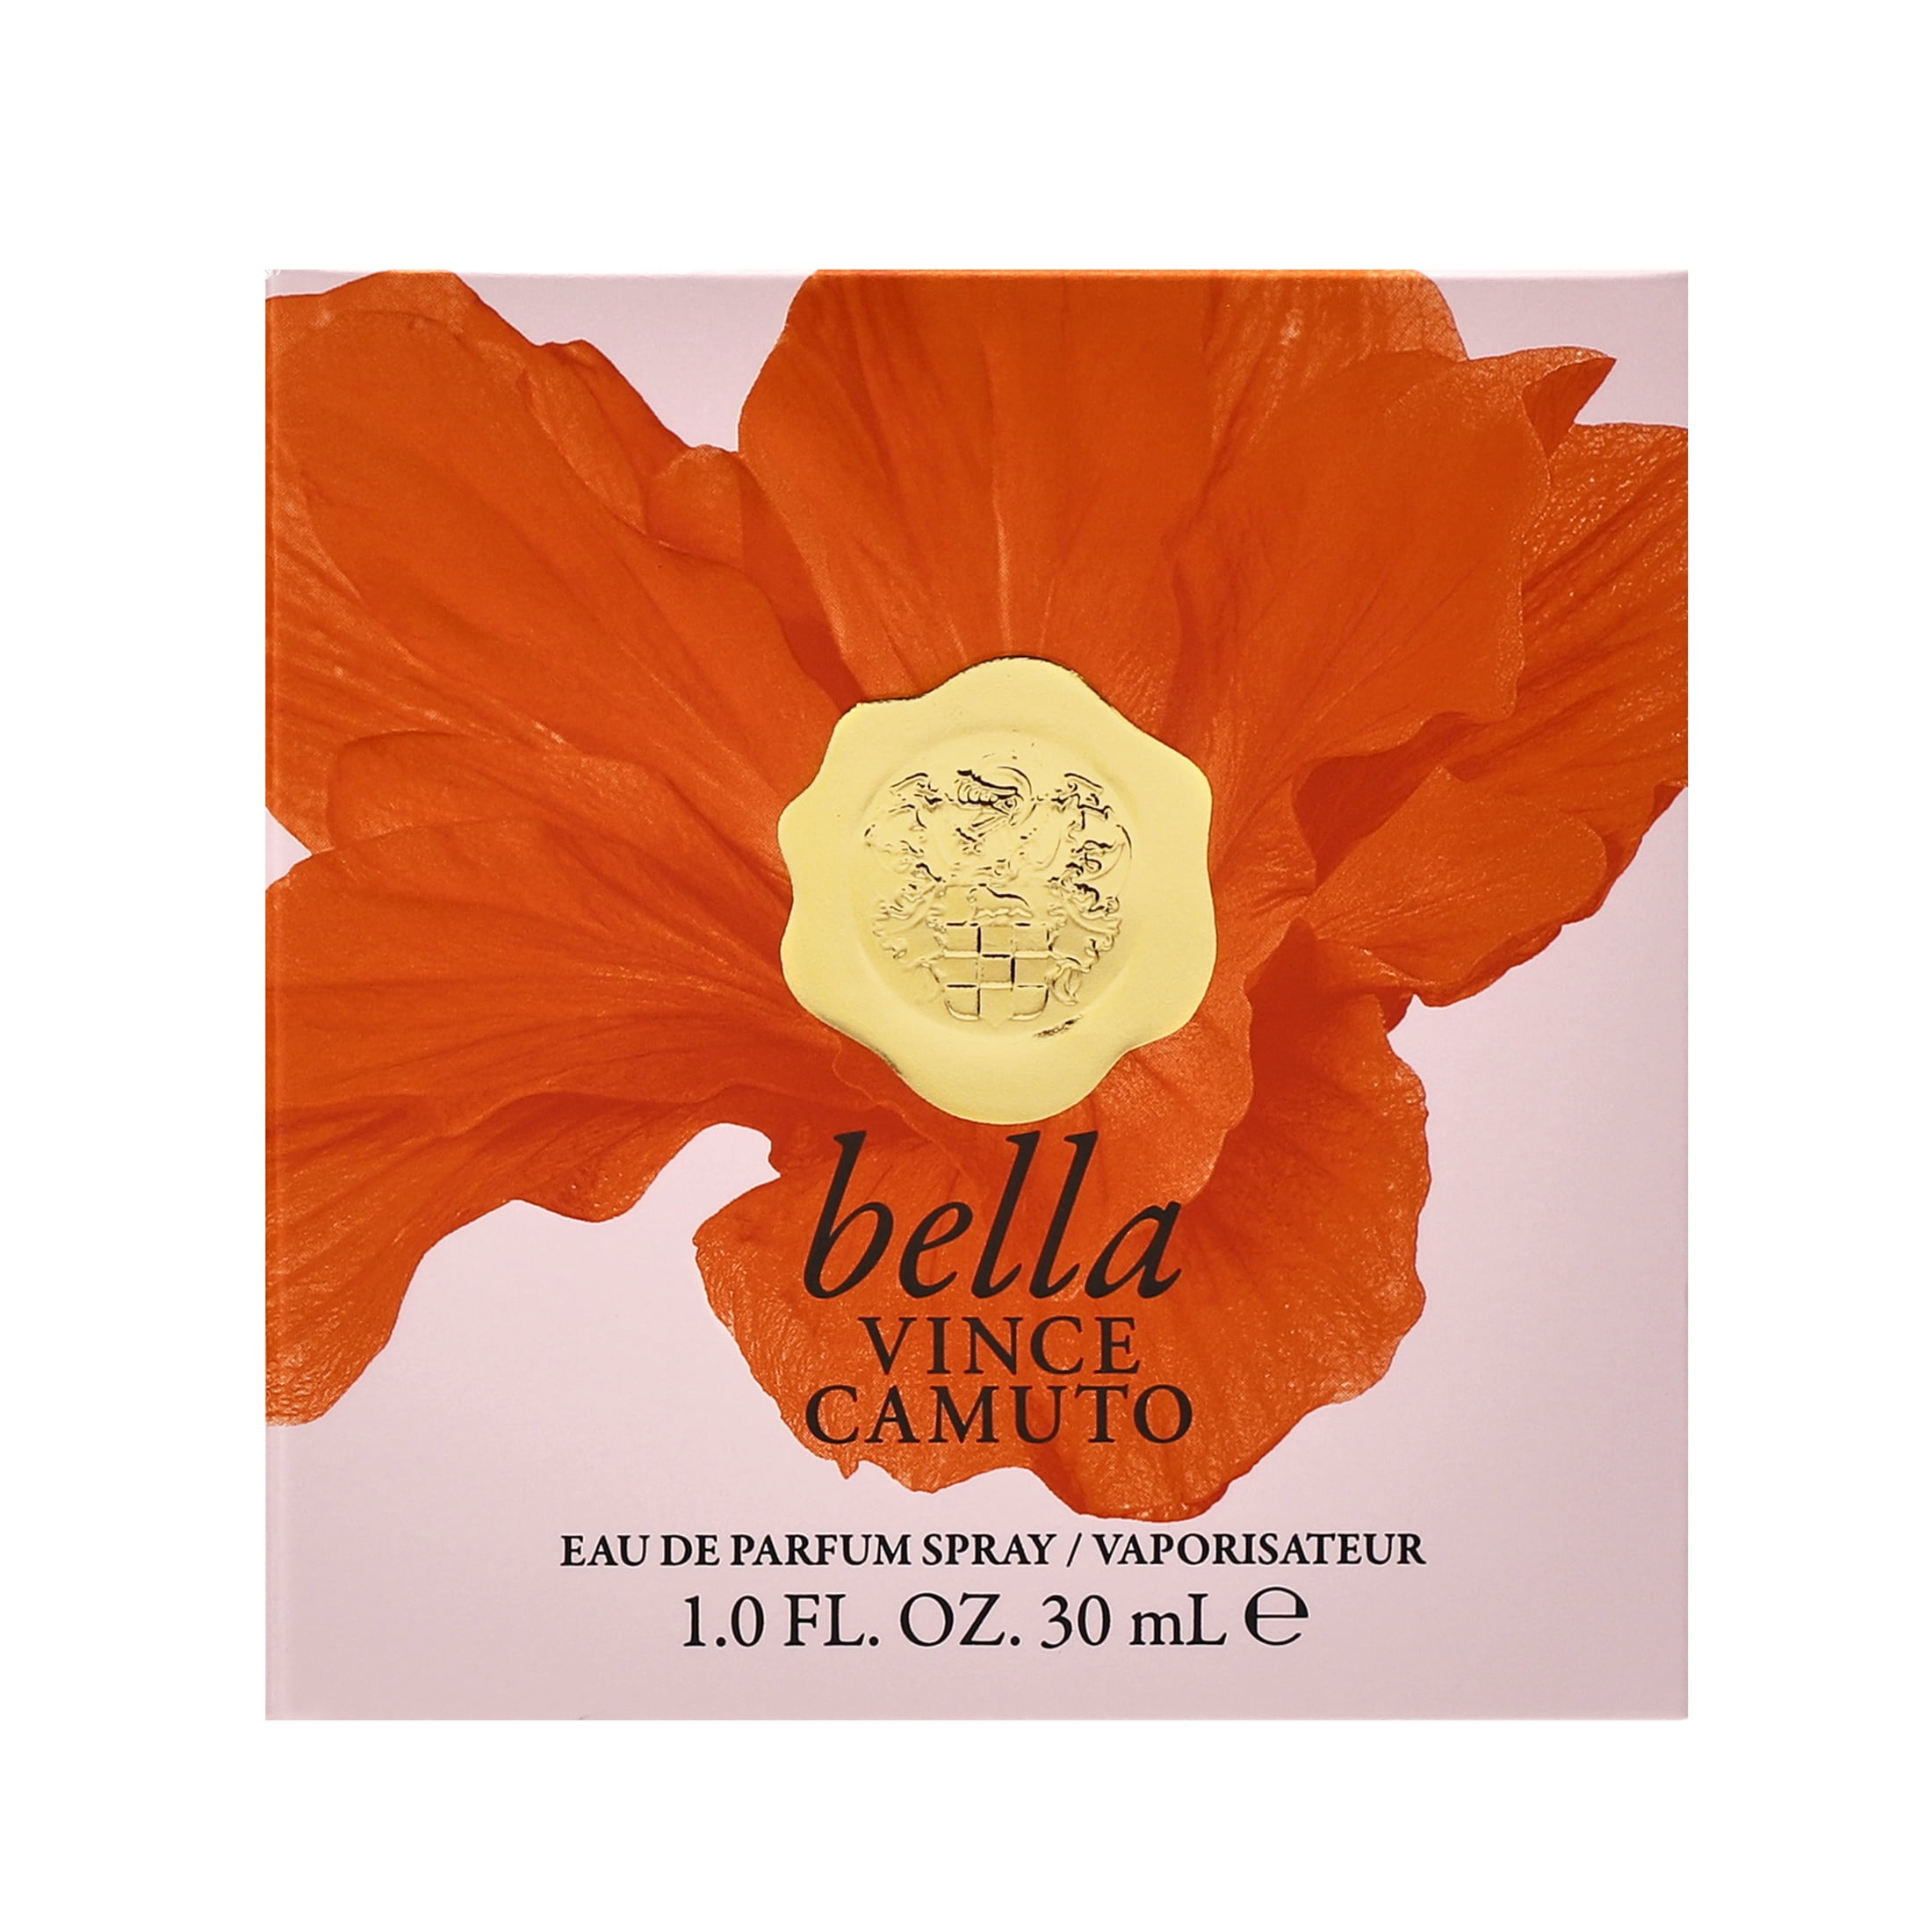 Bella For Women By Vince Camuto Eau De Parfum Spray